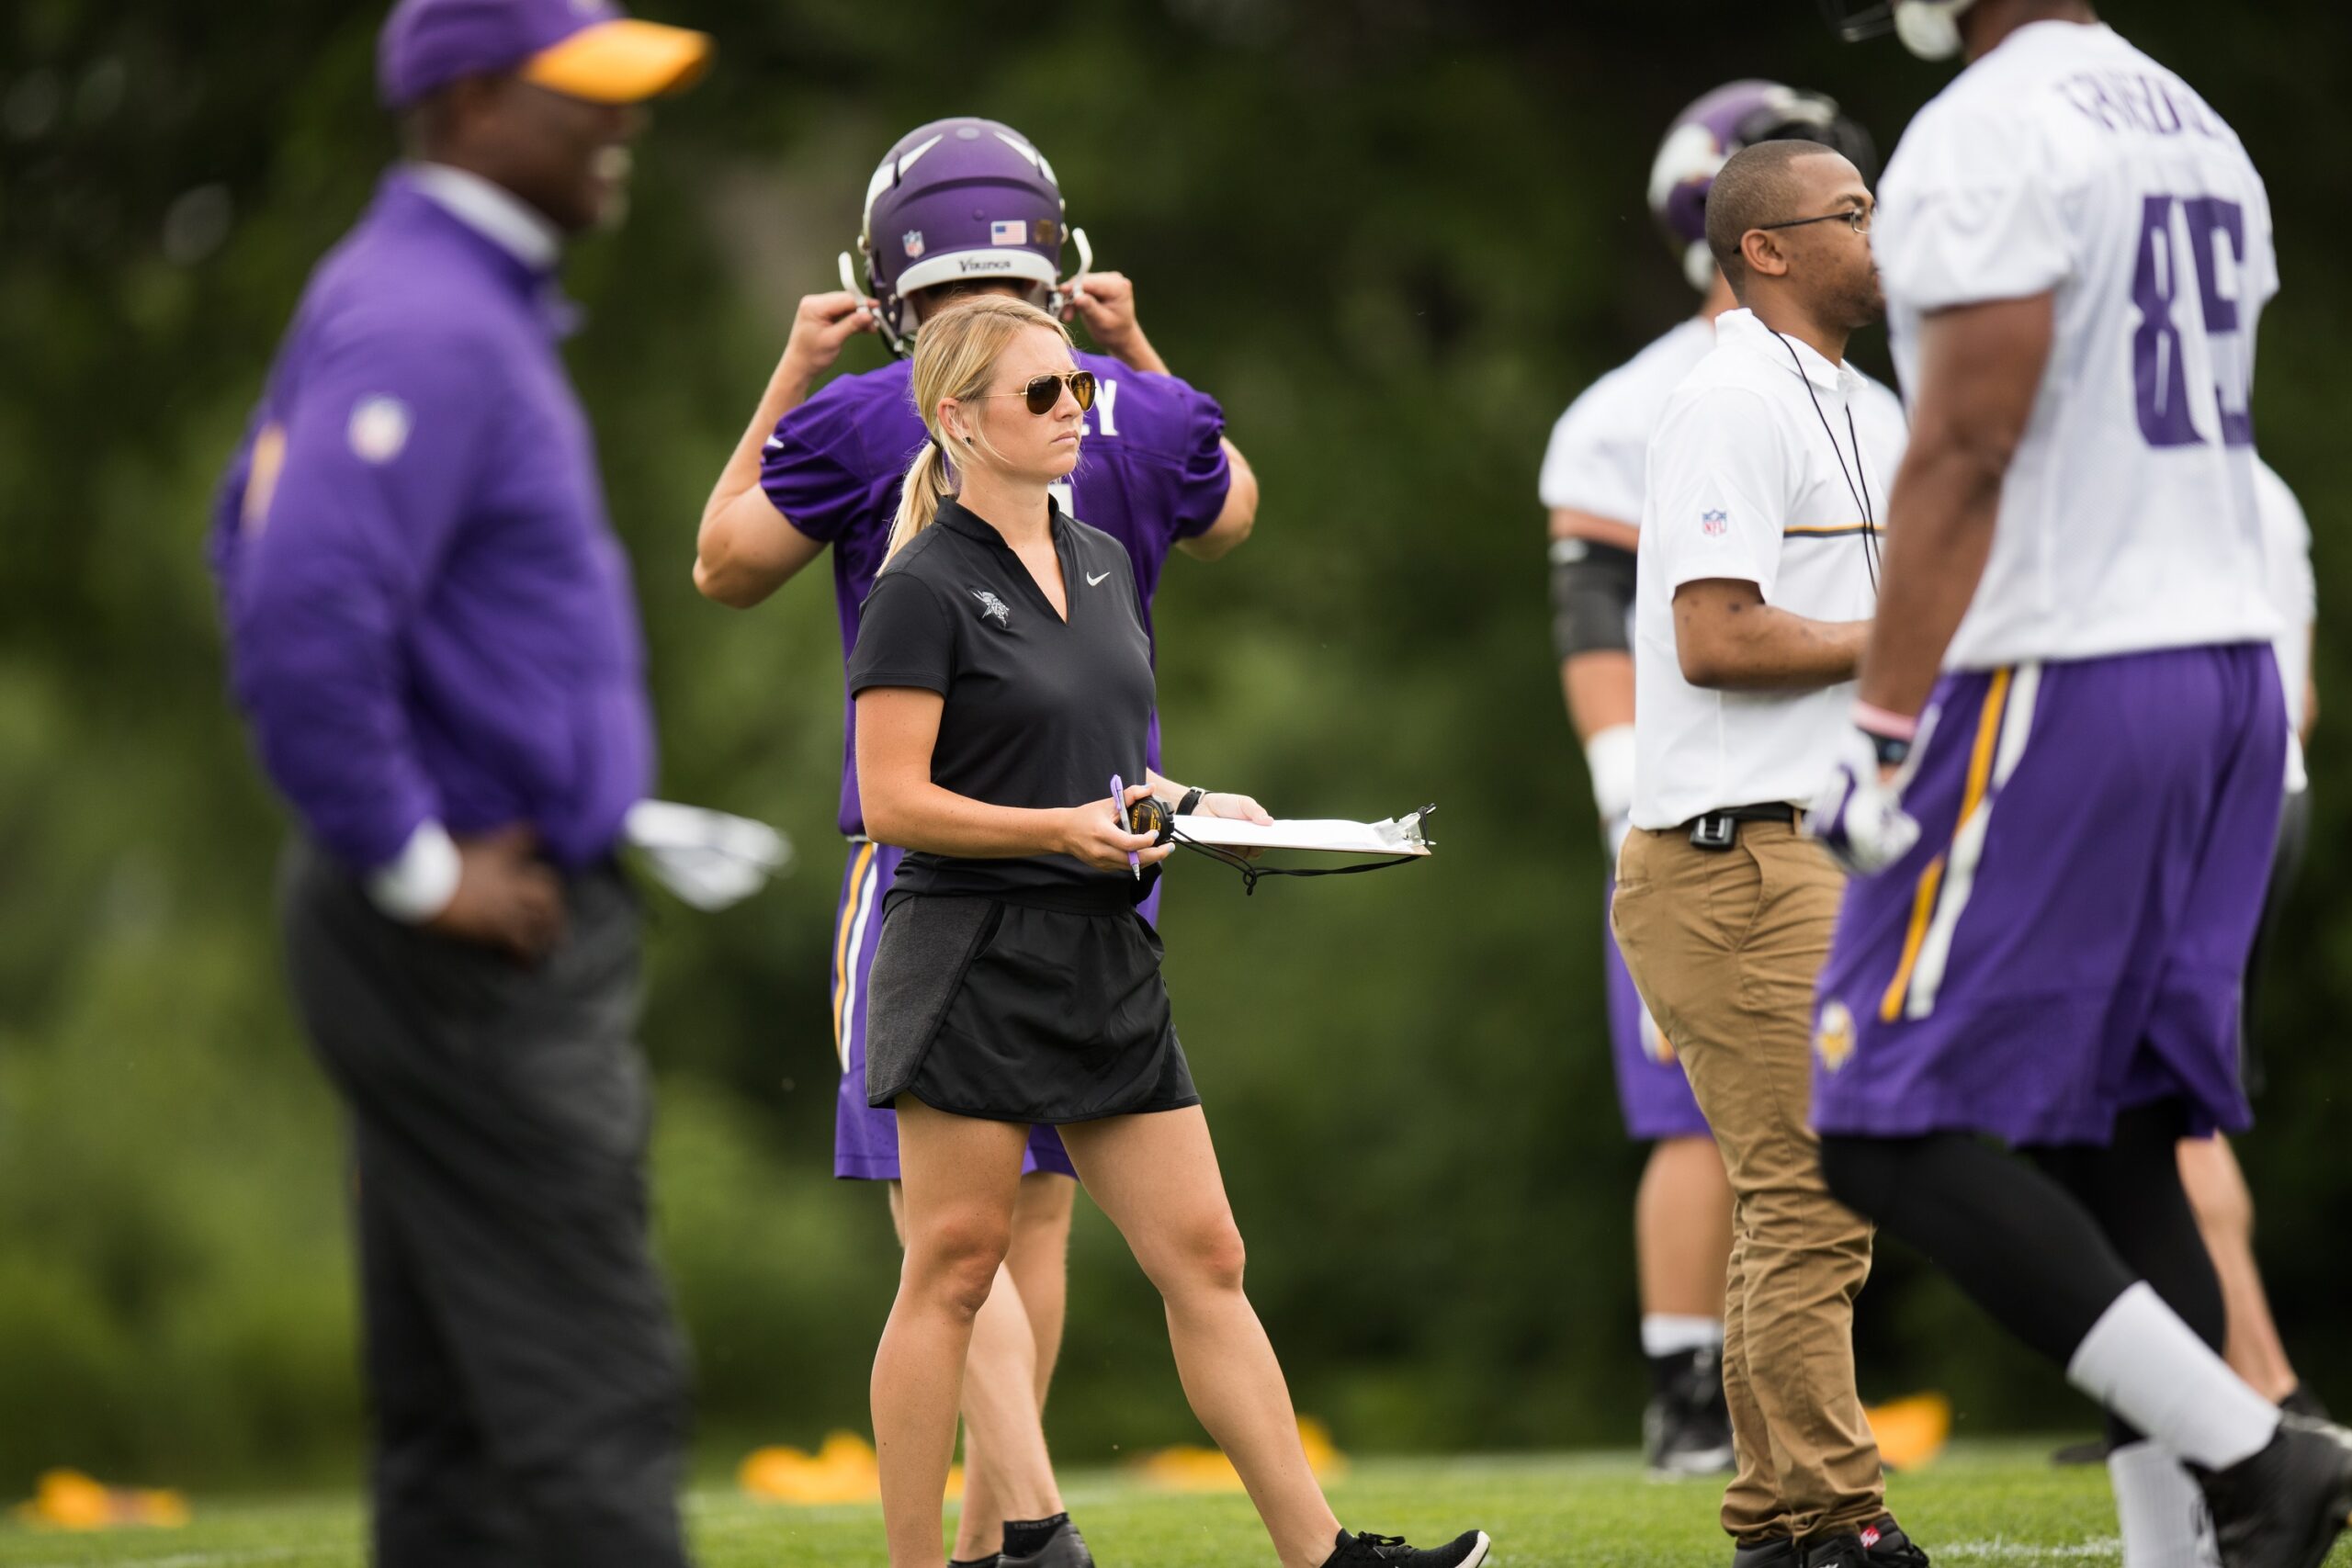 Kelly Kleine of the Minnesota Vikings evaluates players